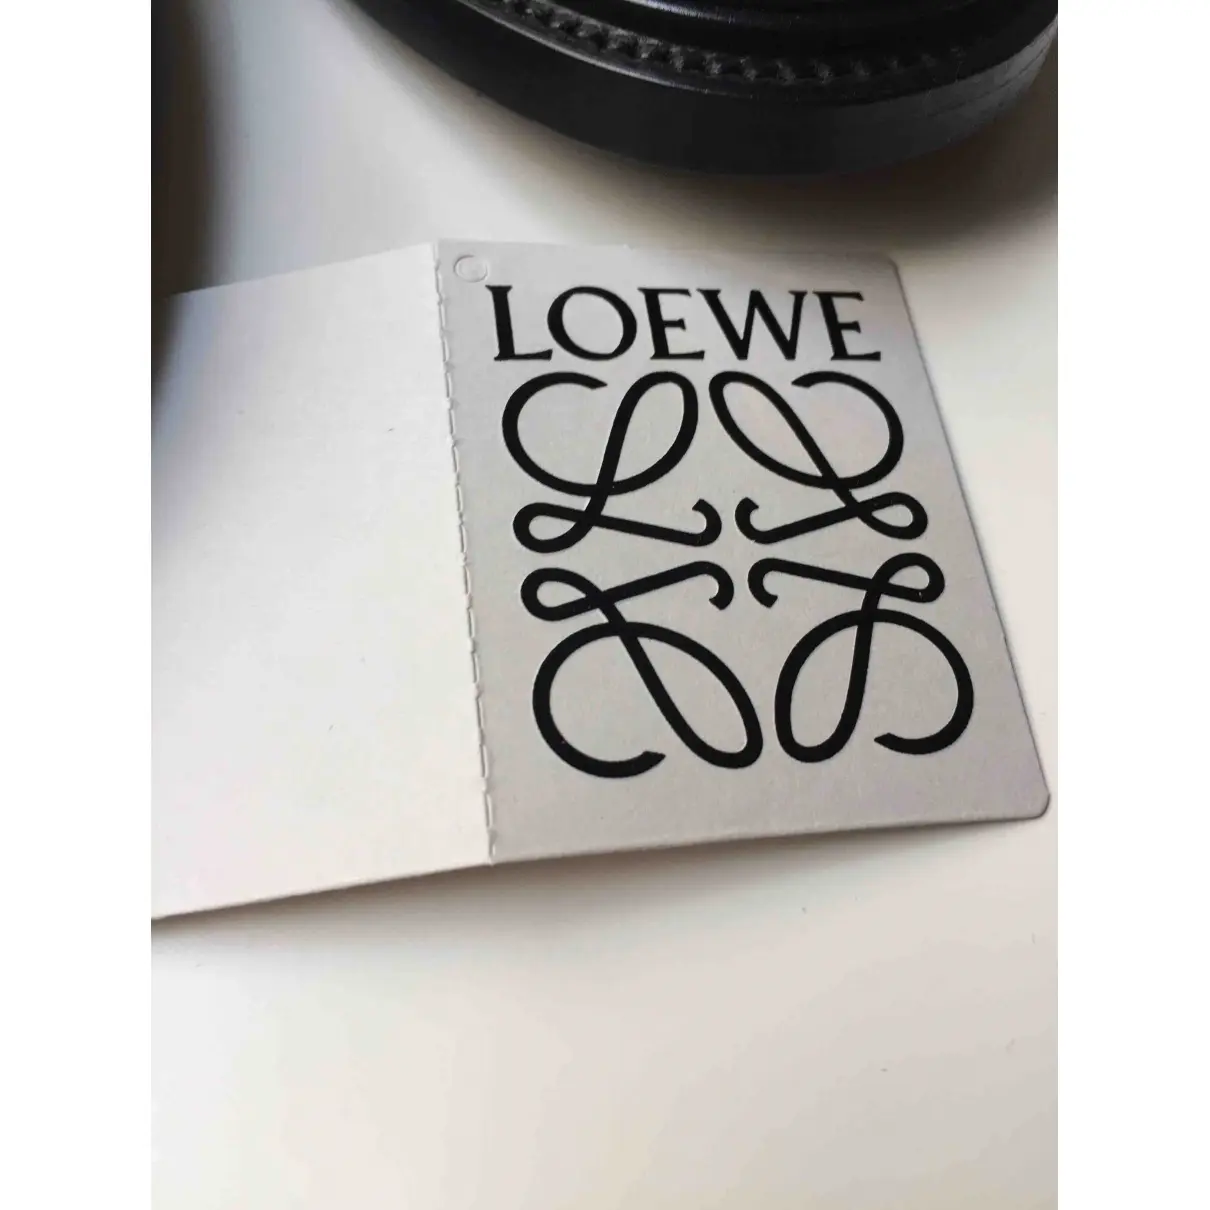 Leather lace ups Loewe